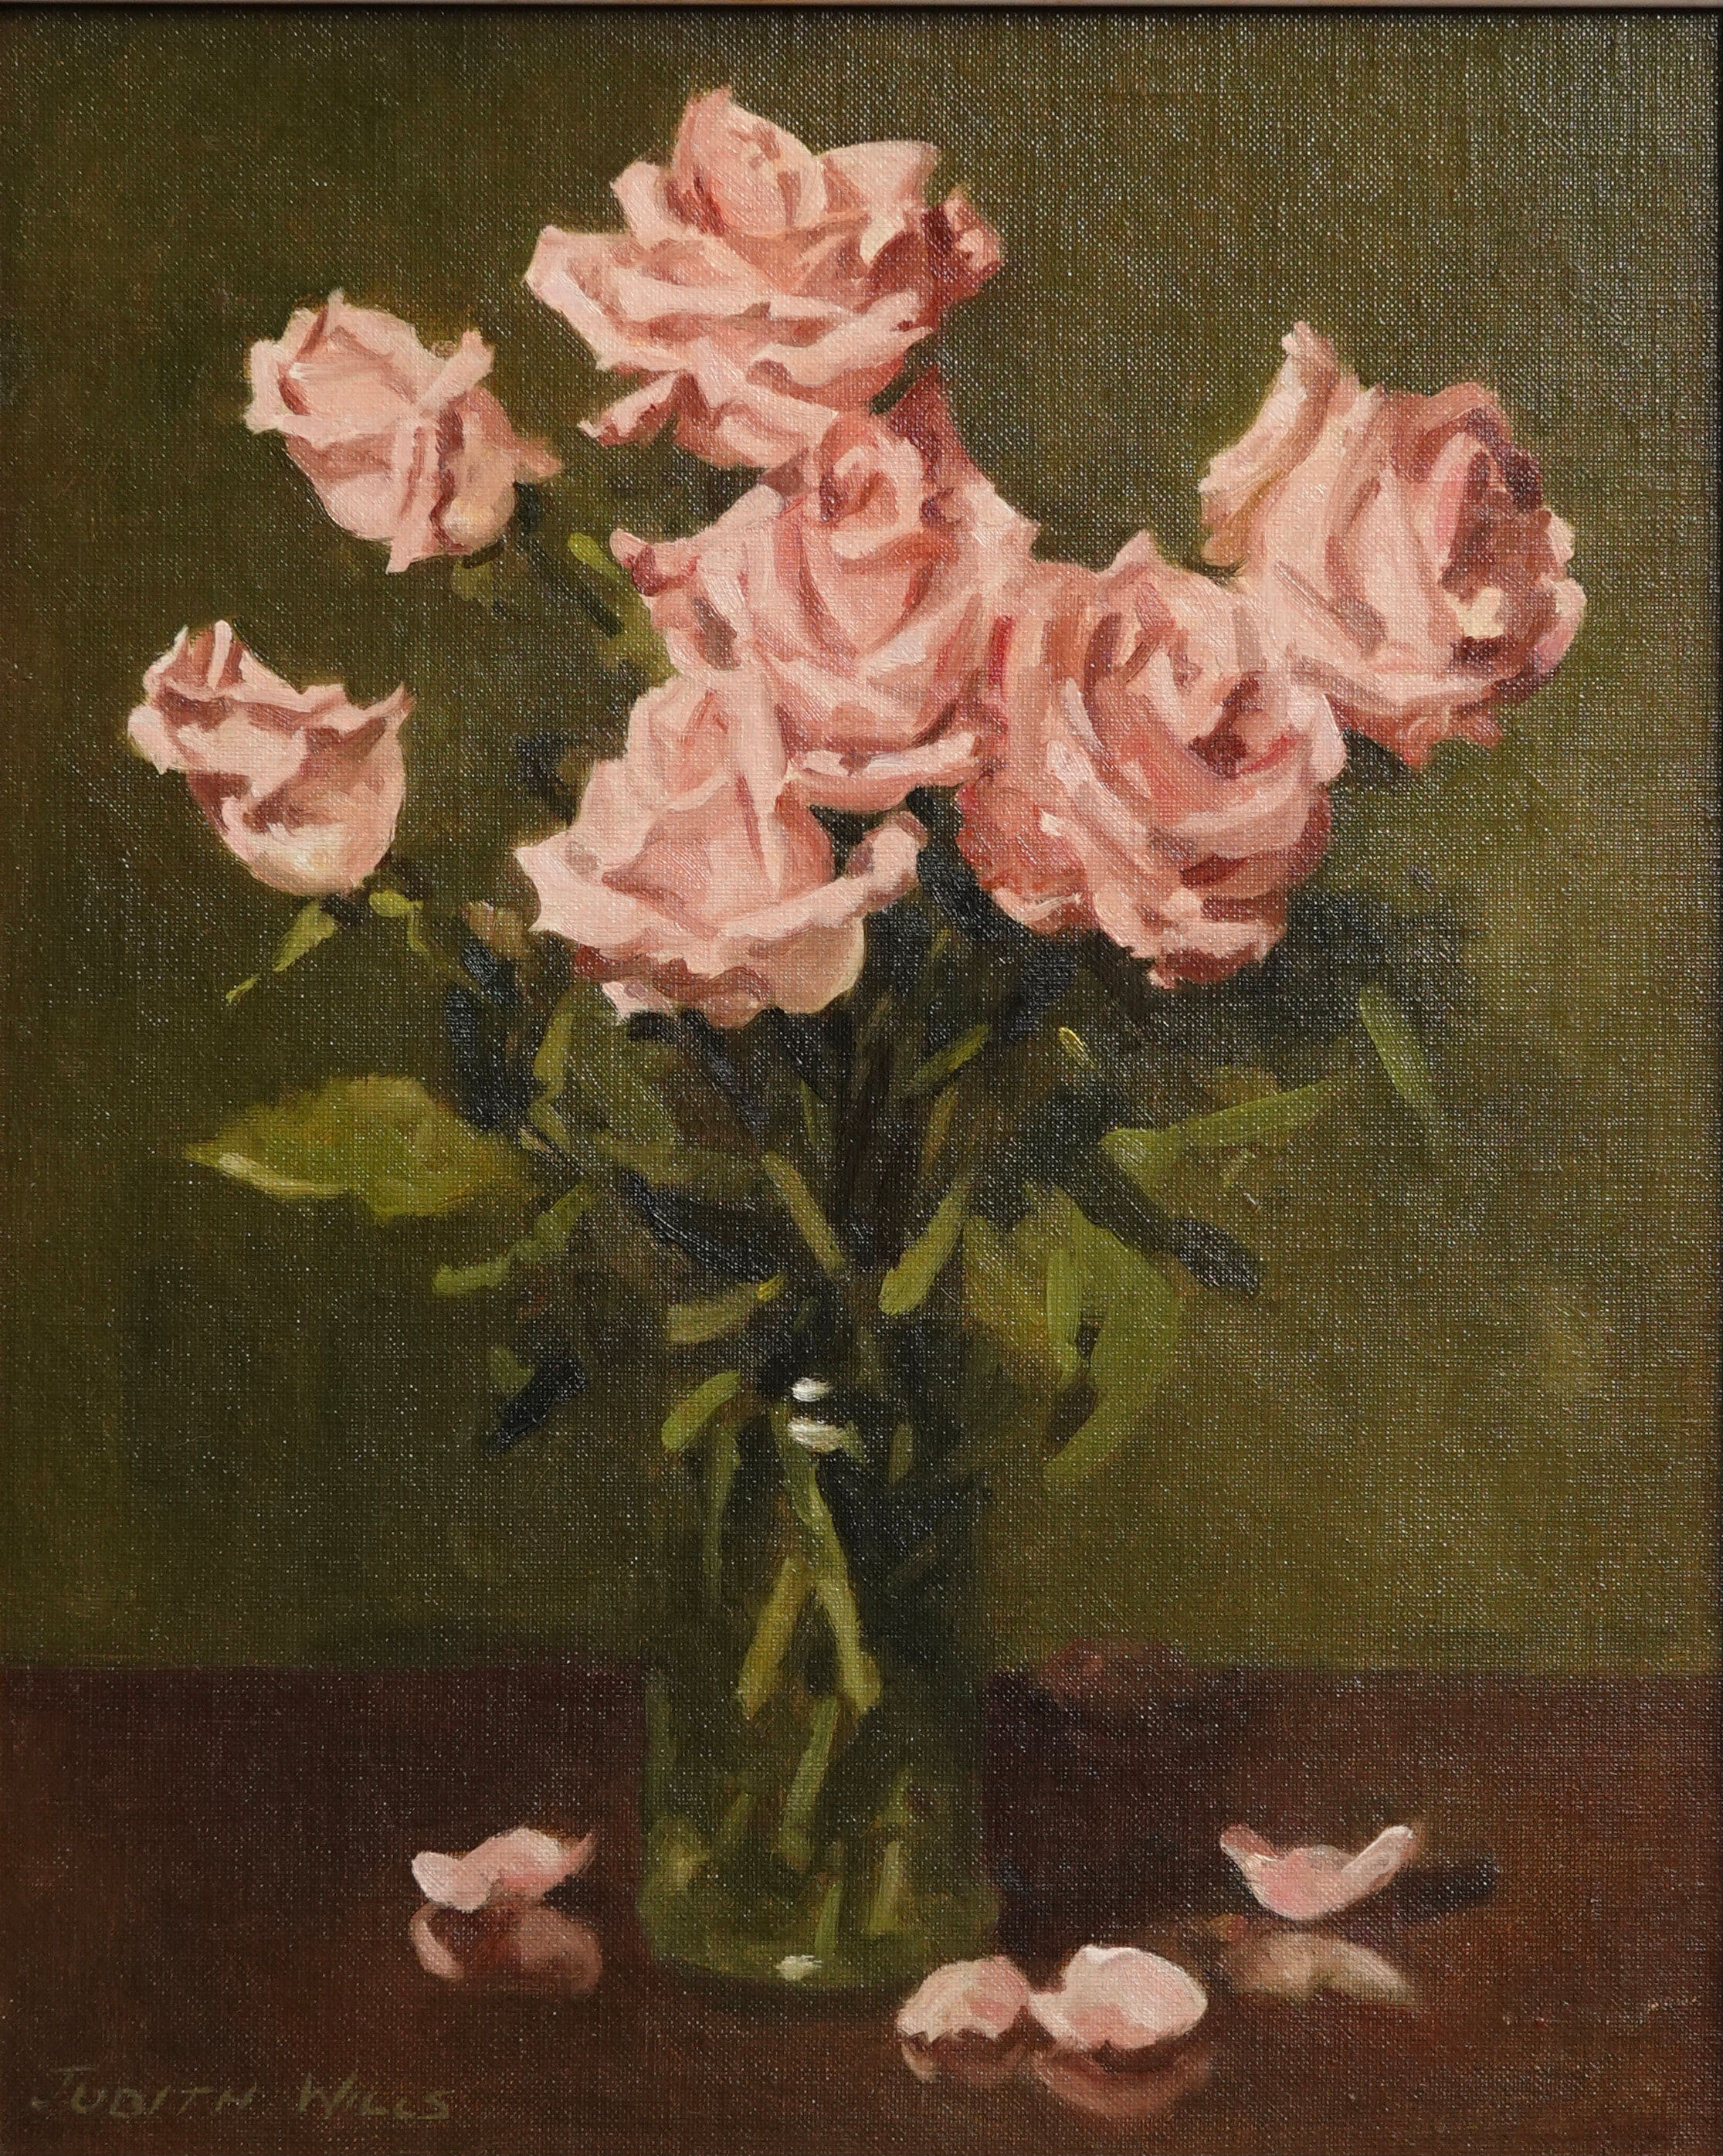 136. Judith Wills - Roses